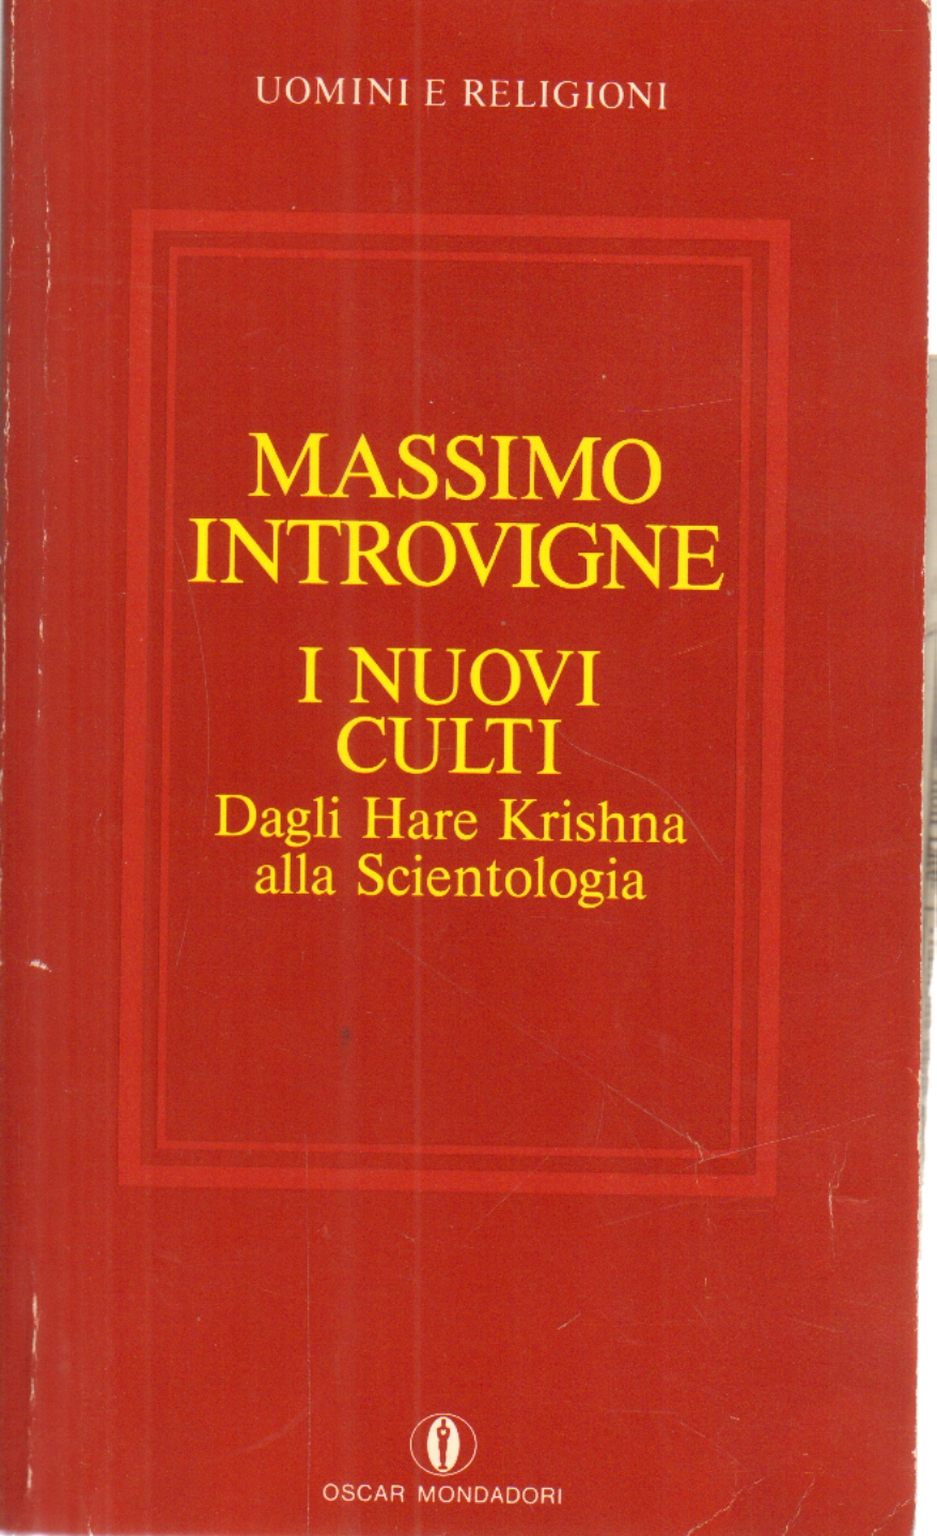 The new religions, Massimo Introvigne